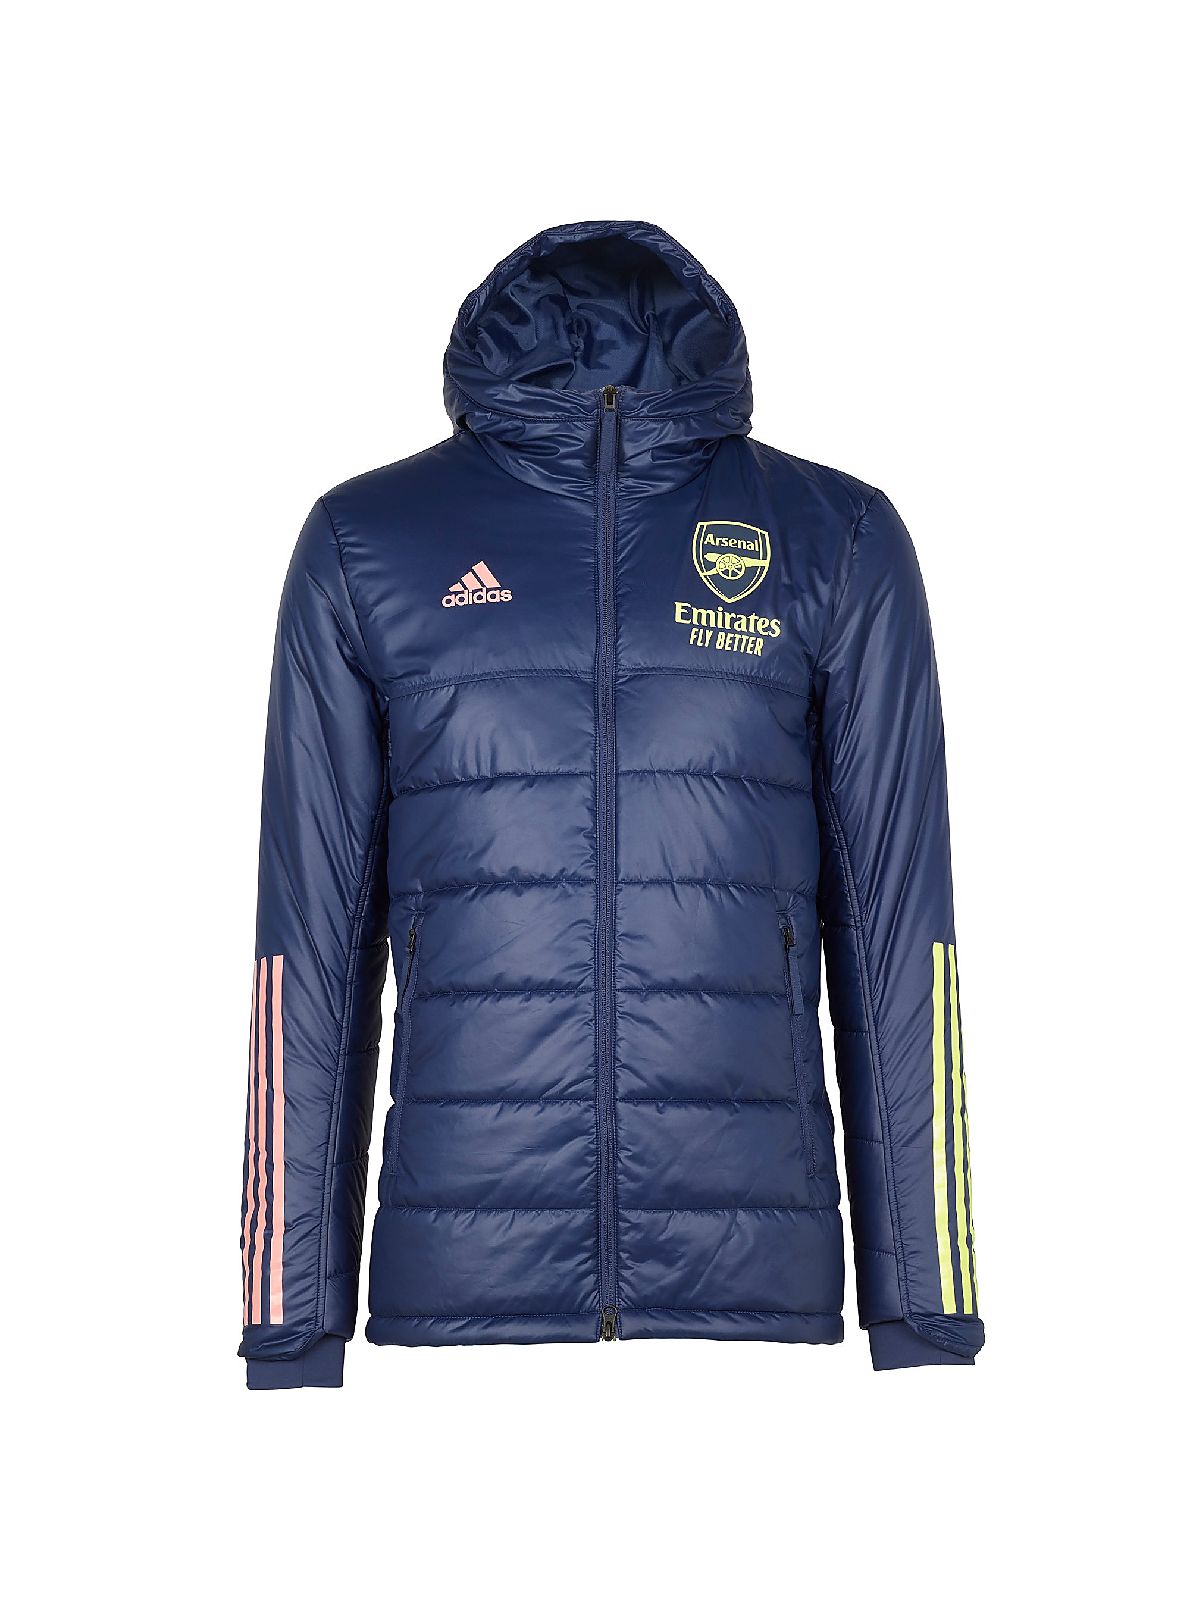 Arsenal 2020-21 Adidas Training Collection - Football Shirt Culture ...